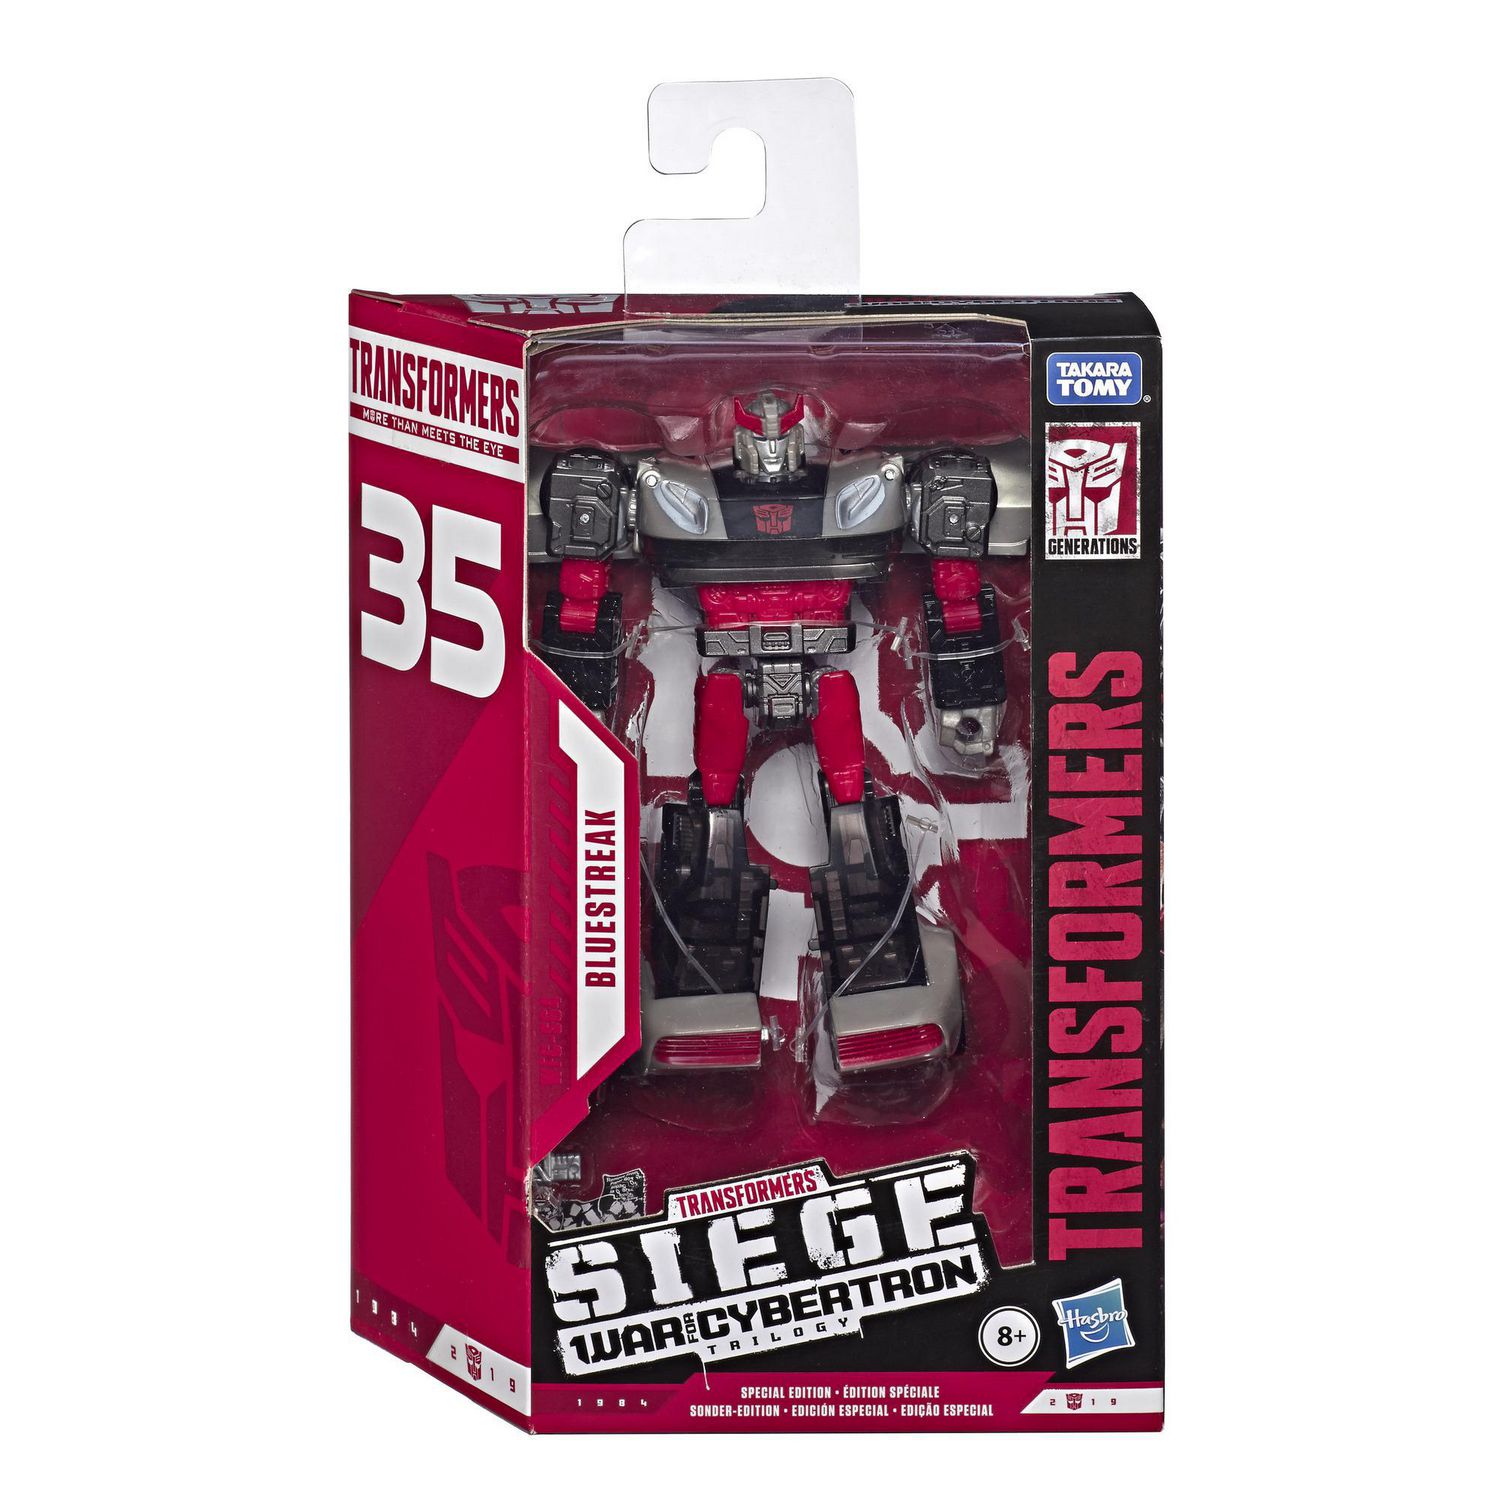 Jouets Transformers Generations War For Cybertron Edition Speciale 35e Anniversaire Wfc S64 Figurine Bluestreak Classe Deluxe Walmart Canada